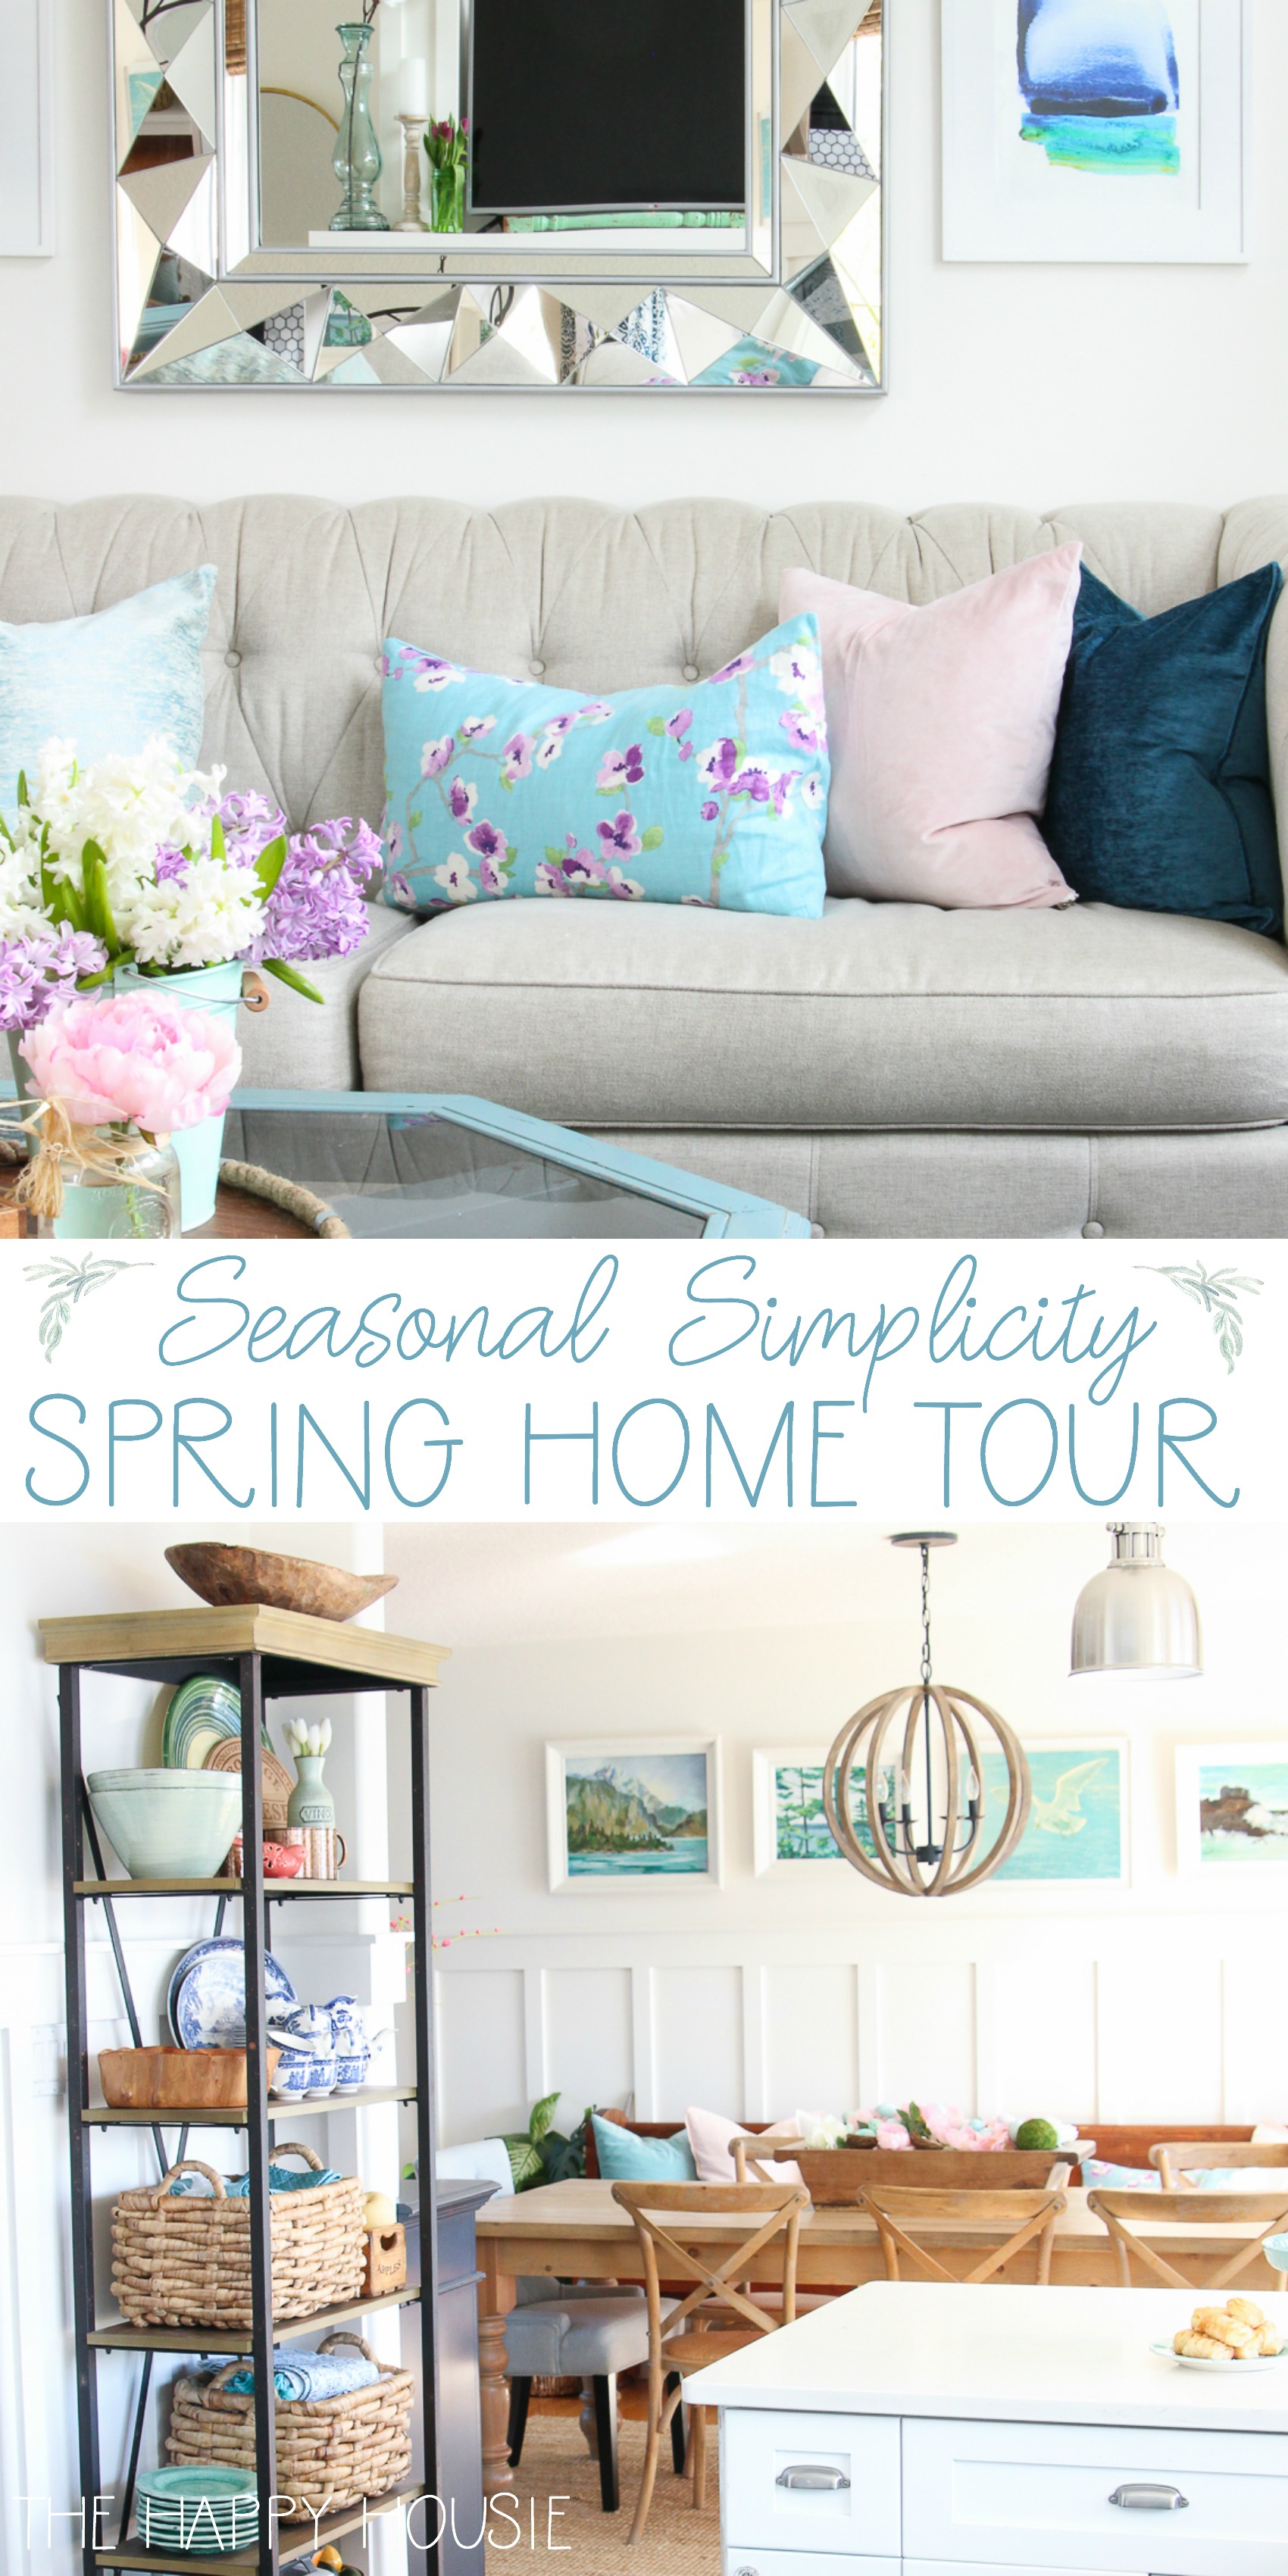 Seasonal Spring Home Tour poster.